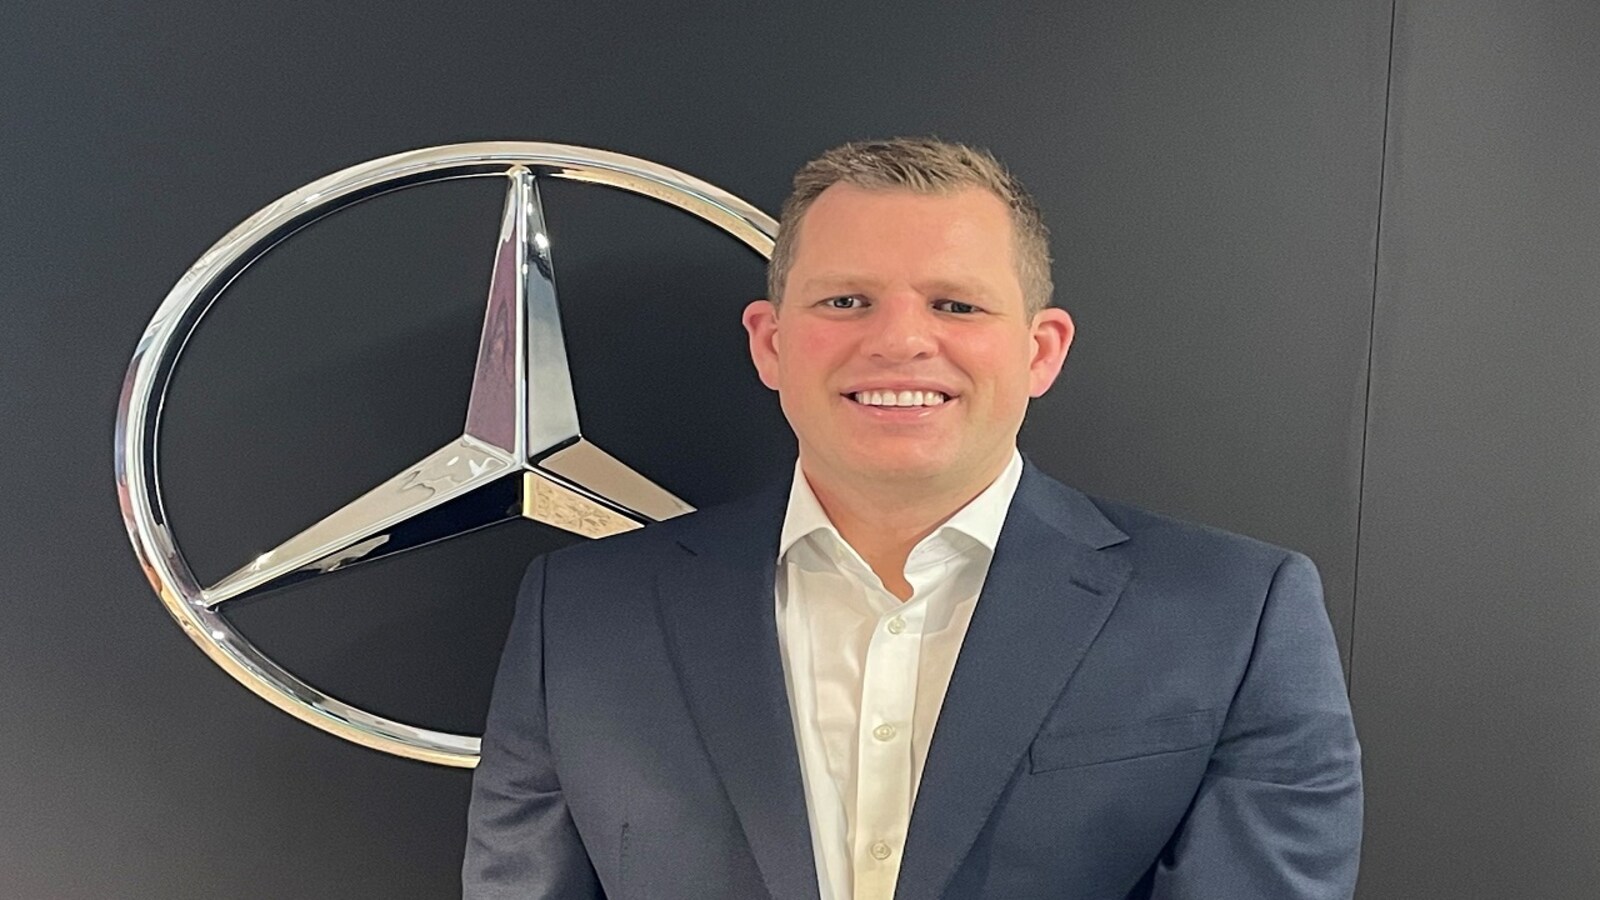 Lance O. - Retail Trainer - Mercedes-Benz USA